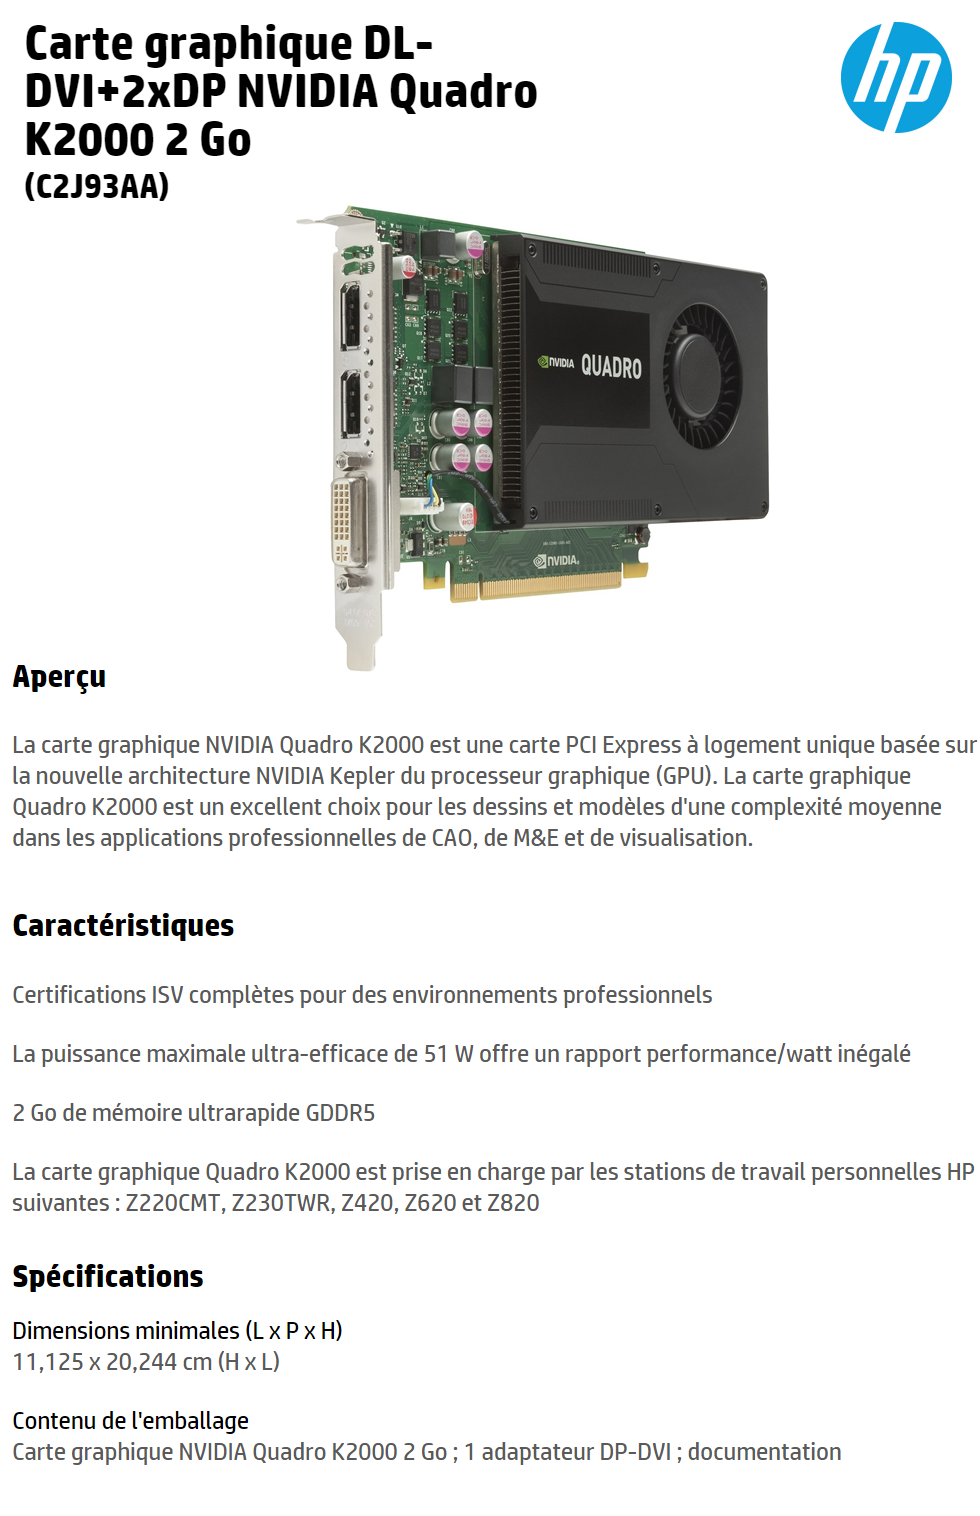 Acheter Carte graphique DL-DVI+2xDP NVIDIA Quadro K2000 2 Go (C2J93AA) Maroc